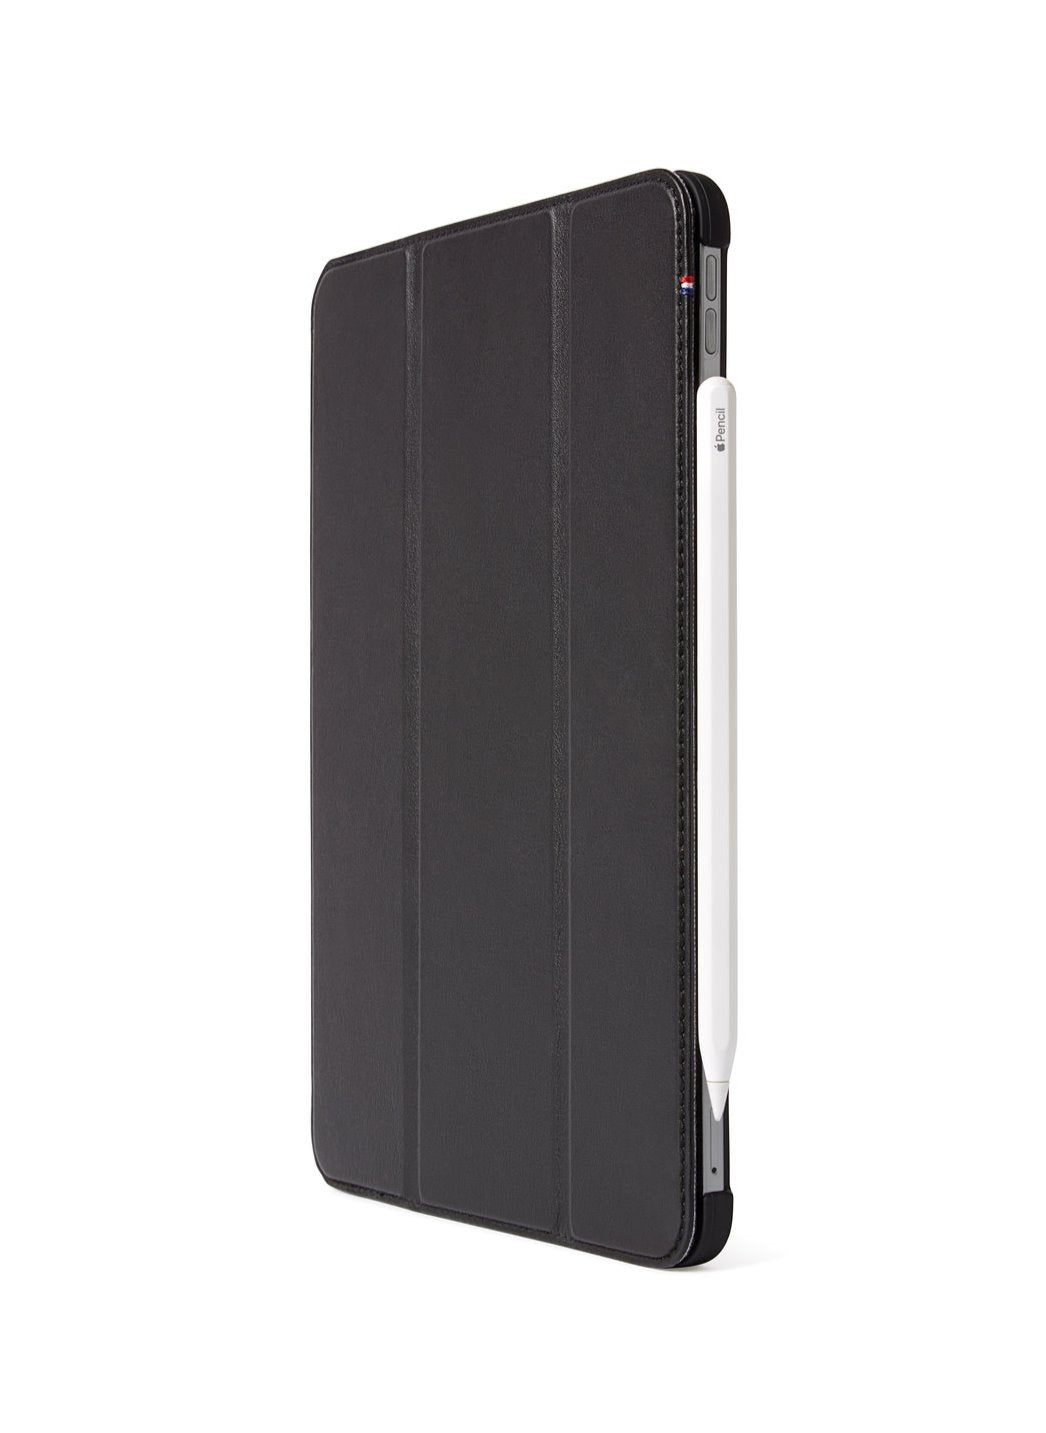 iPad Air 10.9 5th Gen (2022) Leather Case Slim Cover Black